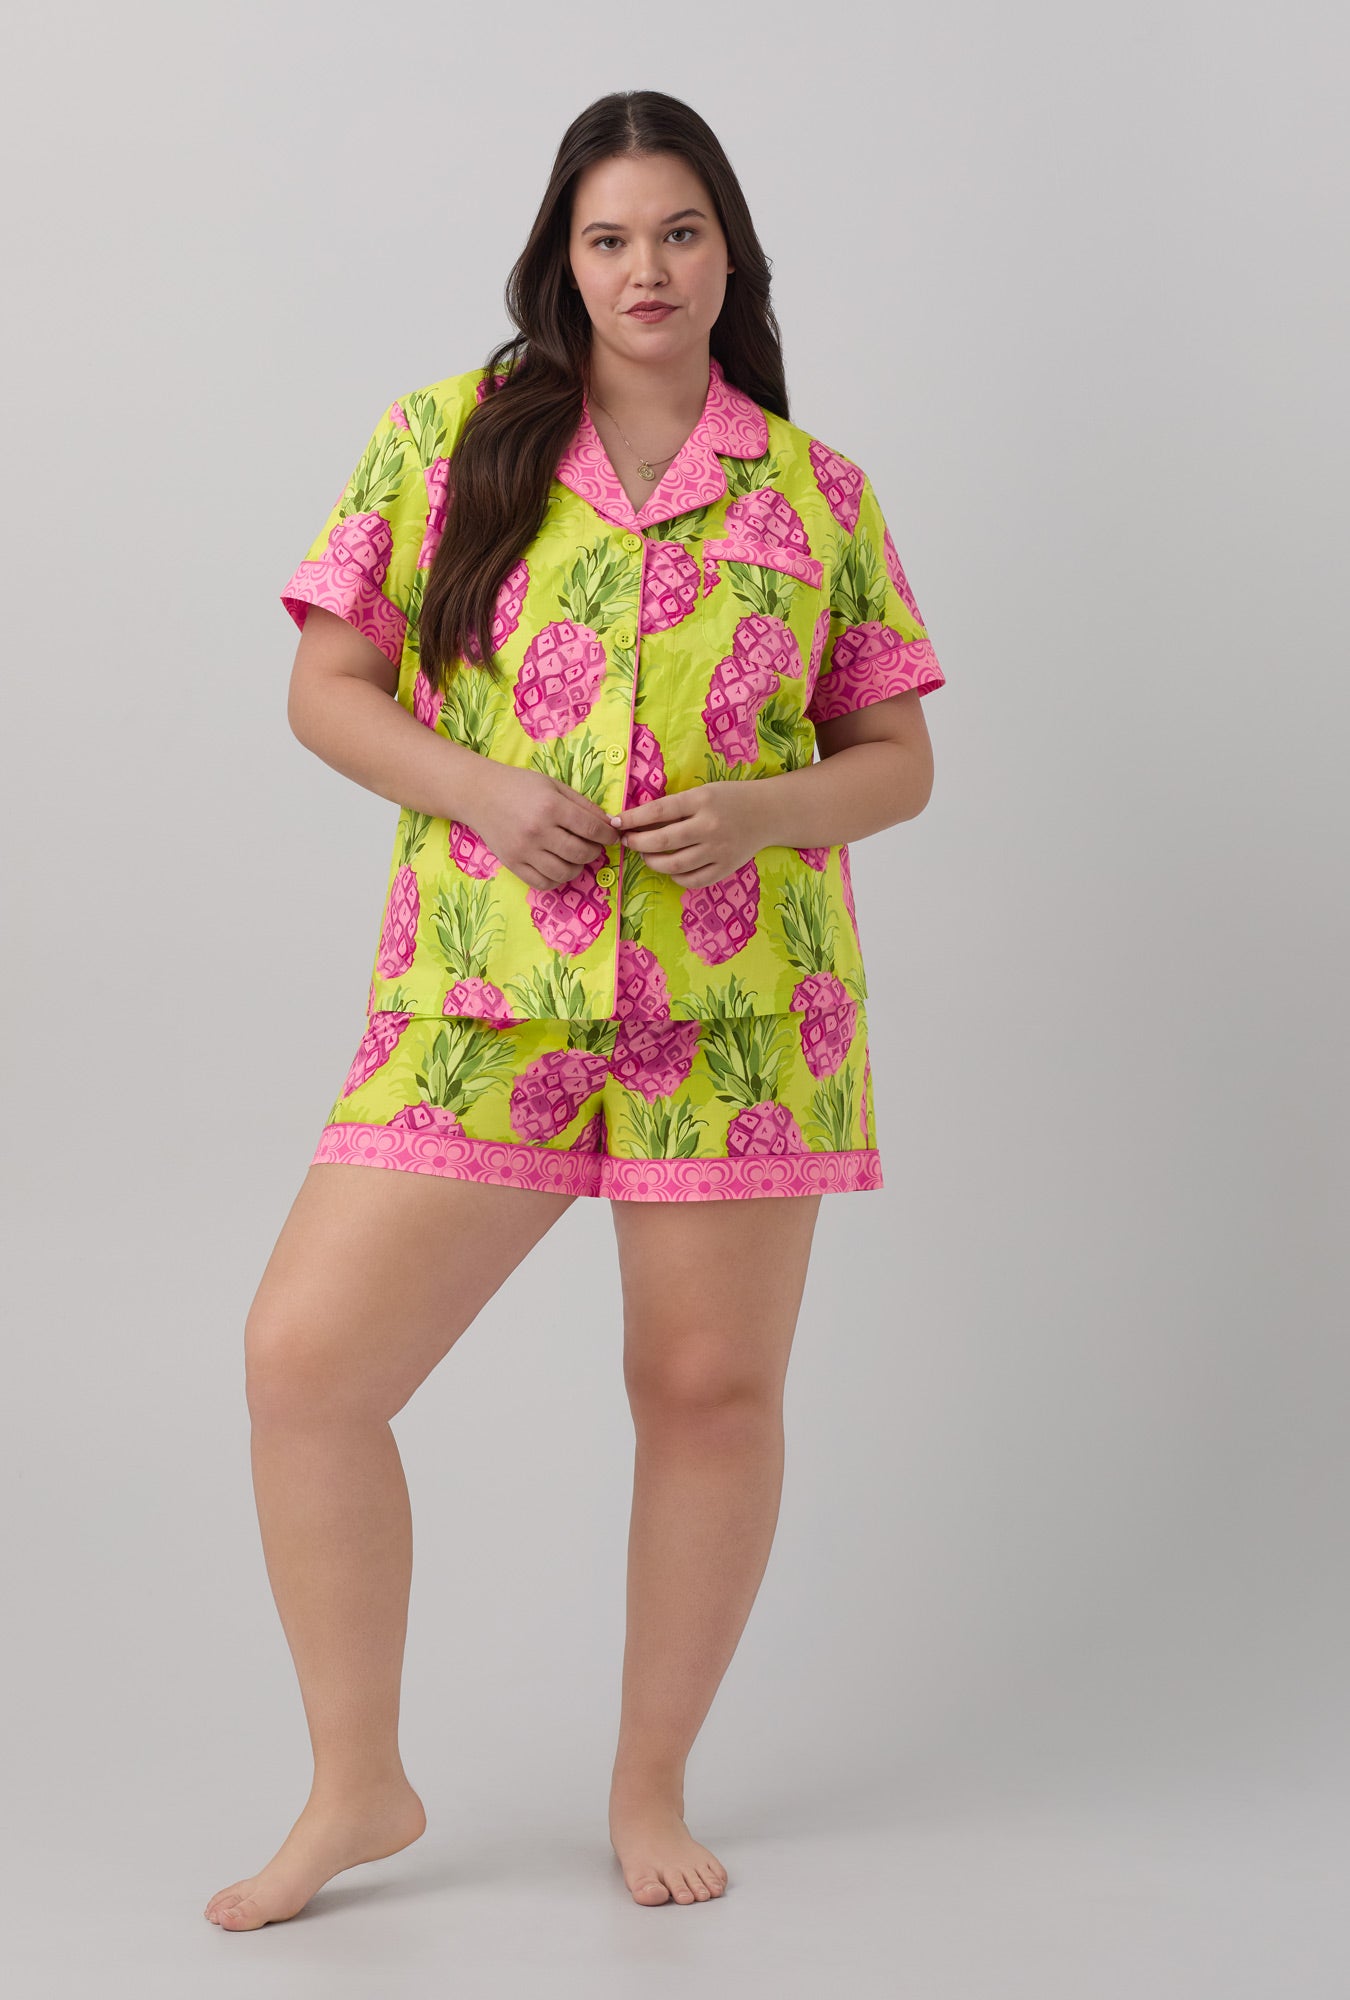 A lady wearing short sleeve classic shorty woven cotton poplin pj set with kiwi pineapple print